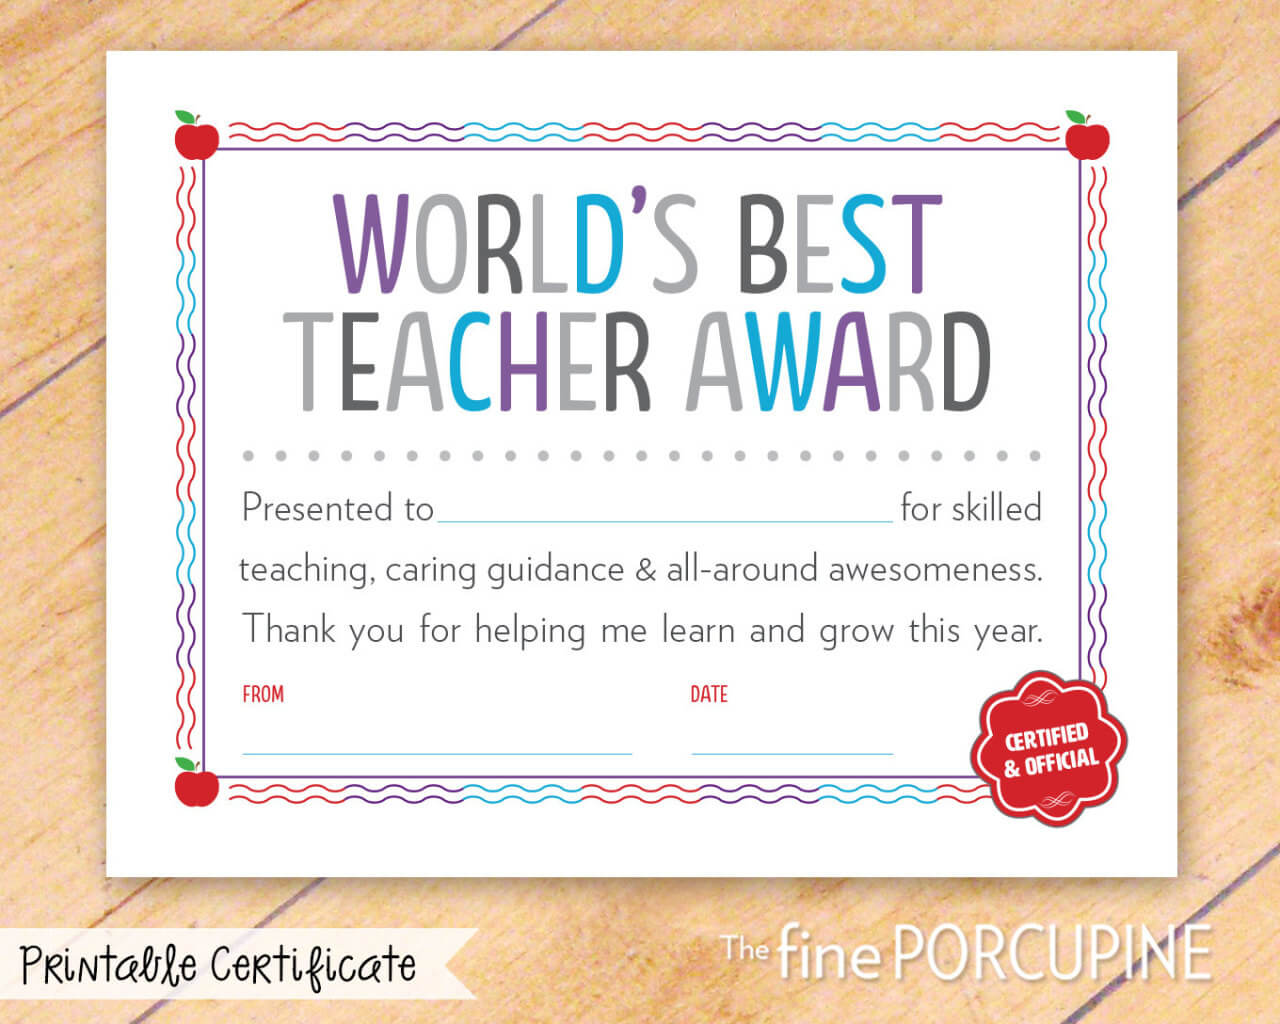 The Fine Porcupine — World's Best Teacher Award, Printable For Best Teacher Certificate Templates Free